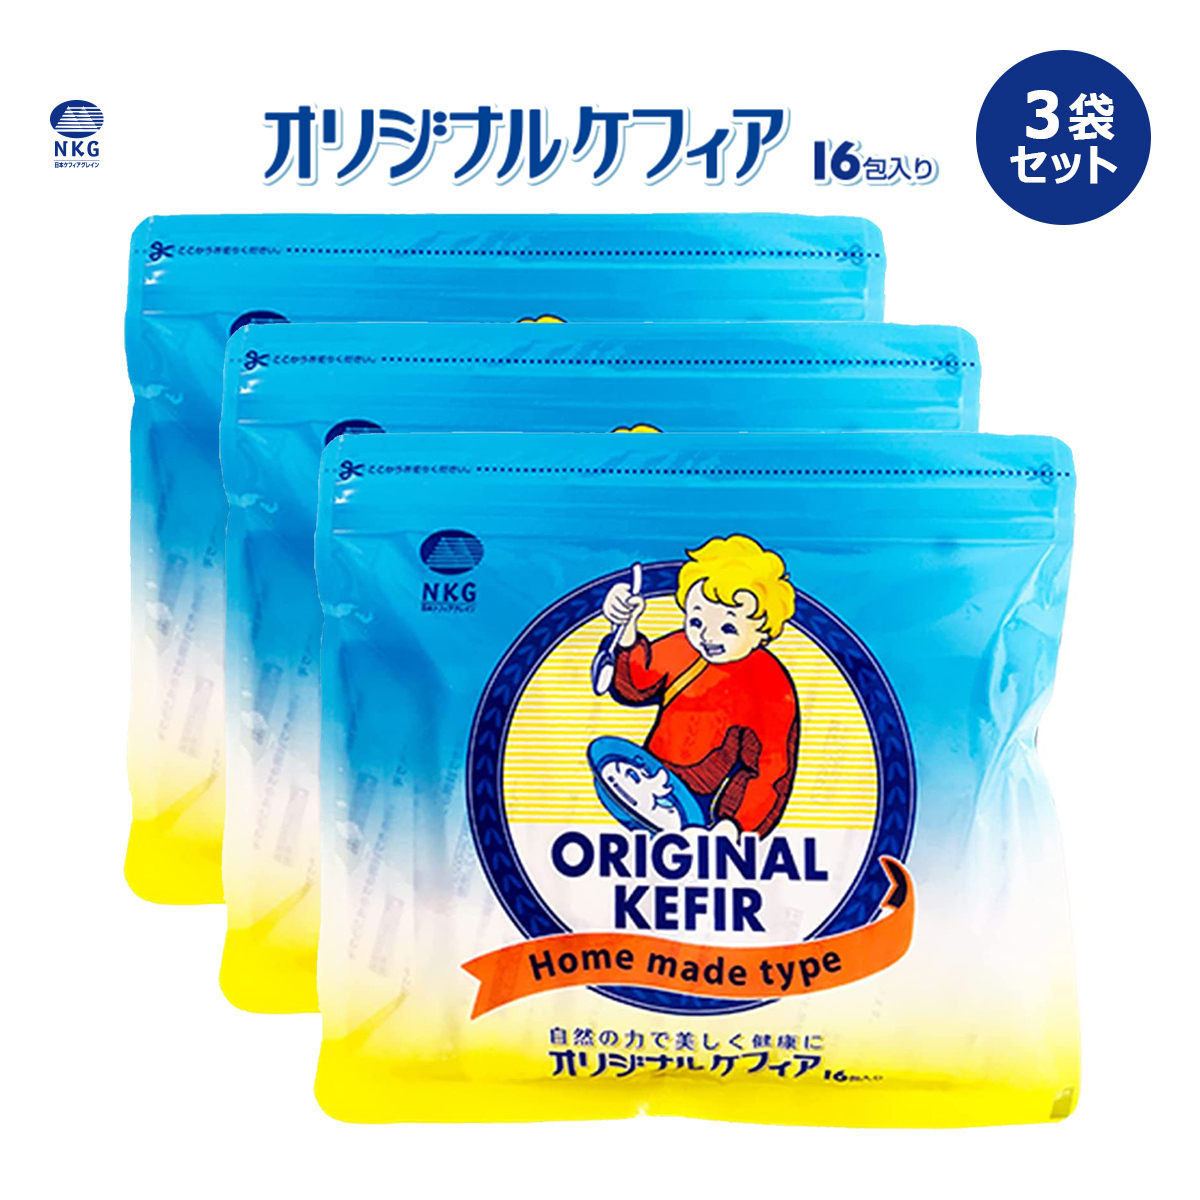  original kefia3 sack (16.×3)kefia yoghurt ... selling on the market powder kind . powder powder handmade Home meido milk soybean milk yoghurt .